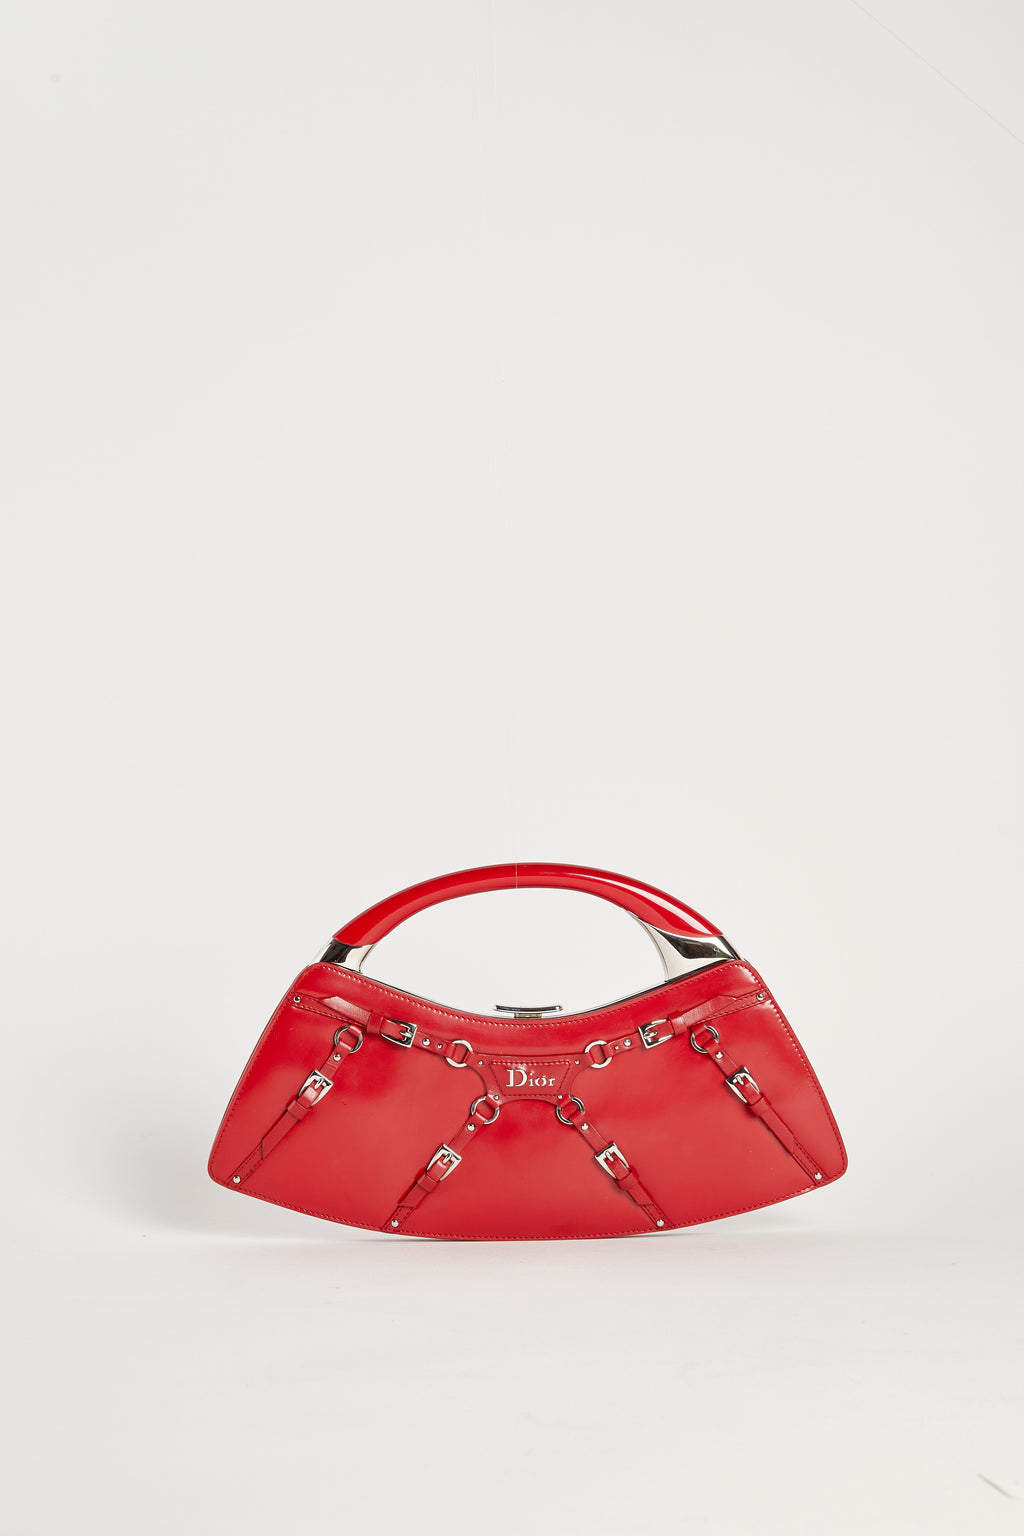 SUPER RARE Christian Dior Galliano Red Bondage Clutch Bag